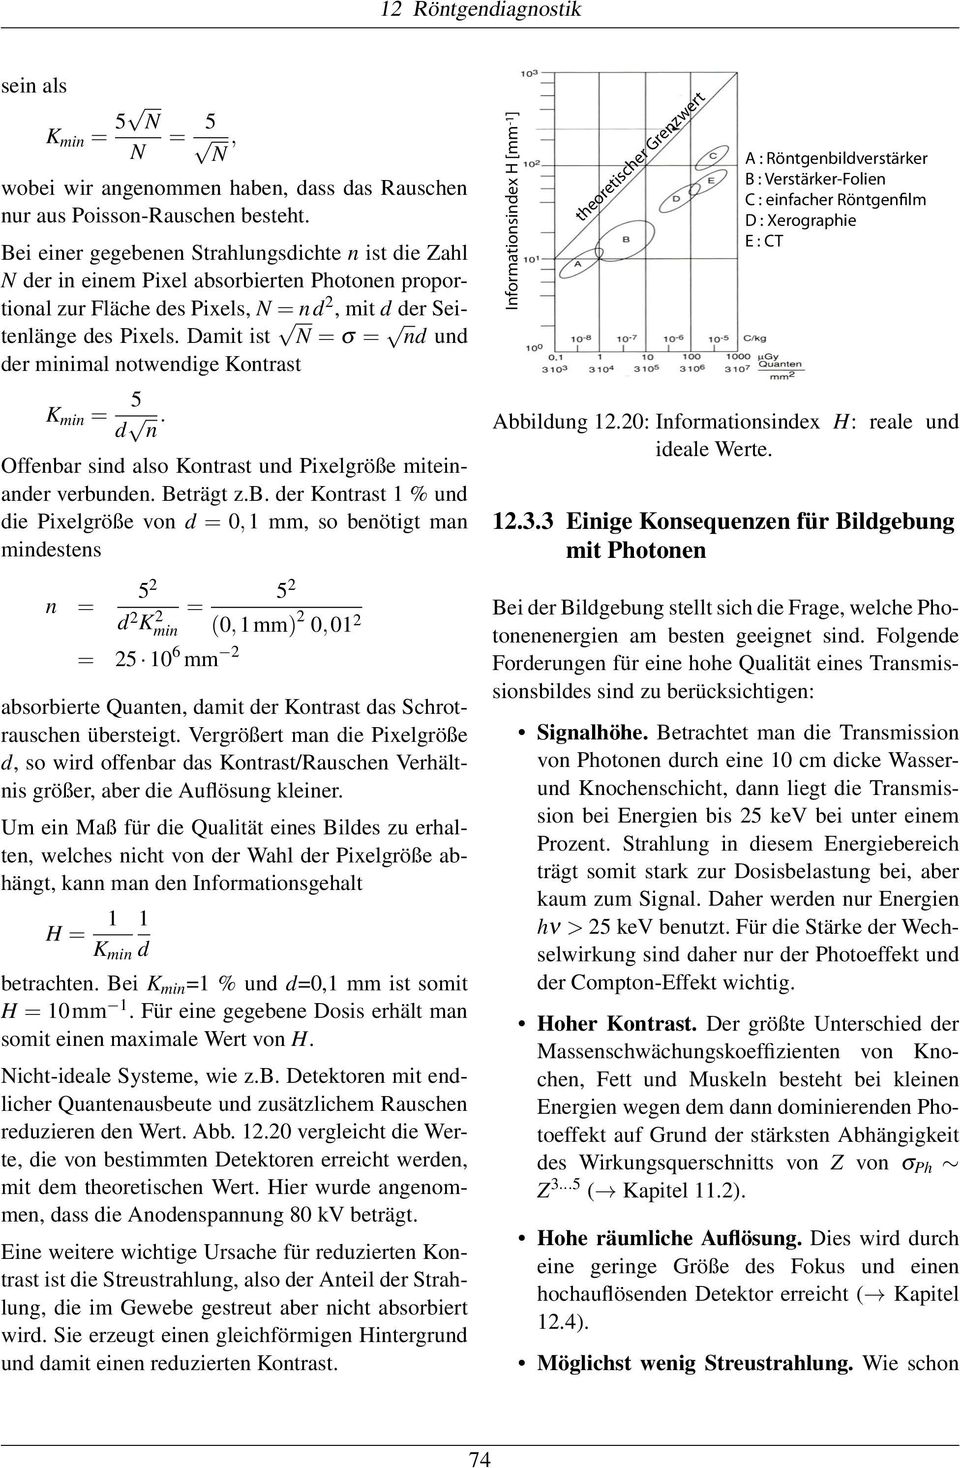 book Continuum Mechanics using Mathematica®: Fundamentals, Applications